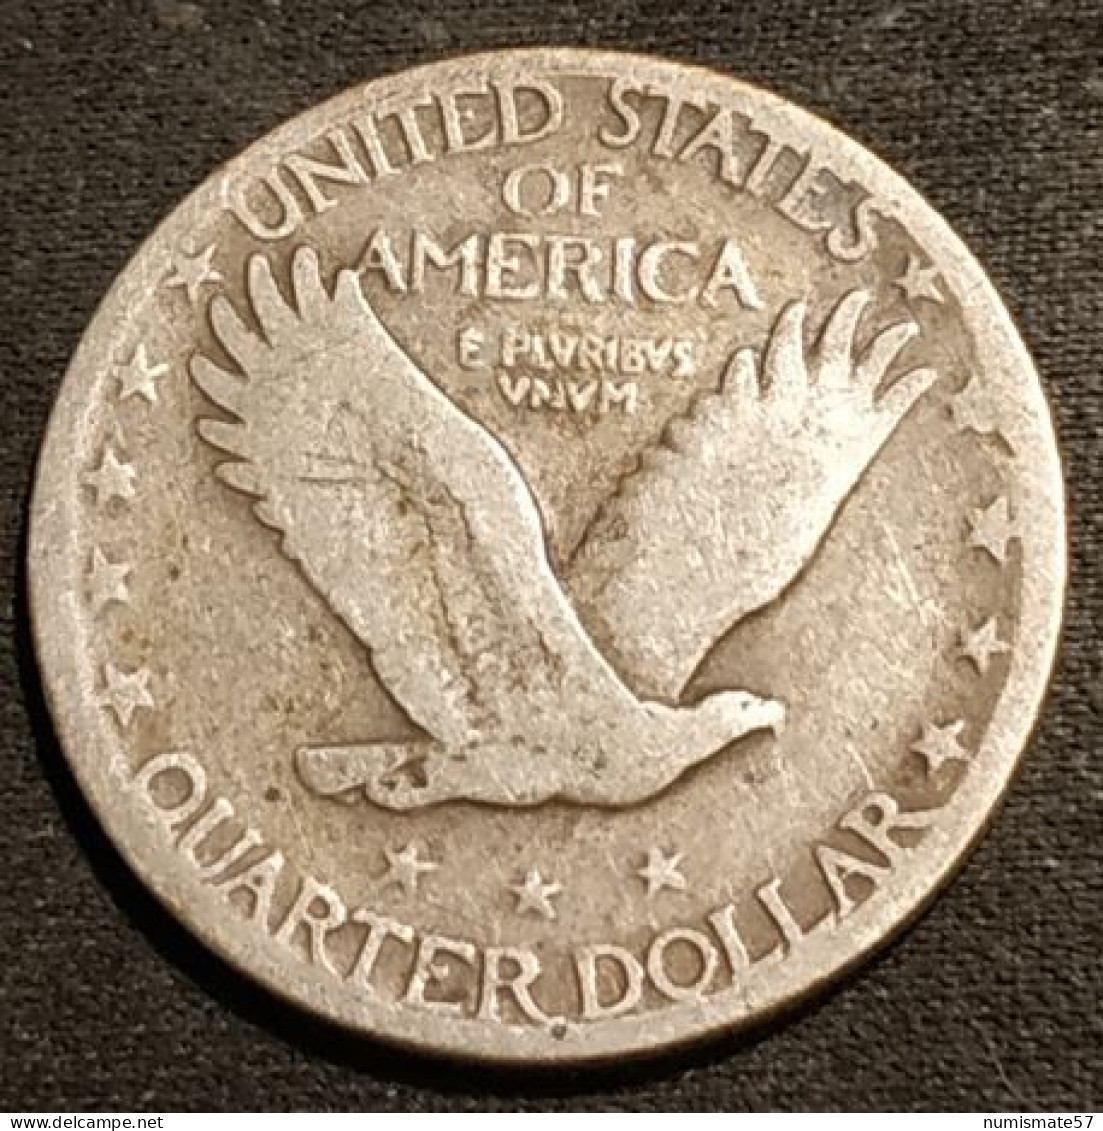 ETATS UNIS - USA - ¼ - 1/4 DOLLAR 1926 - Argent - Silver - Standing Liberty Quarter - 2nd Type - 1916-1930: Standing Liberty (Liberté Debout)